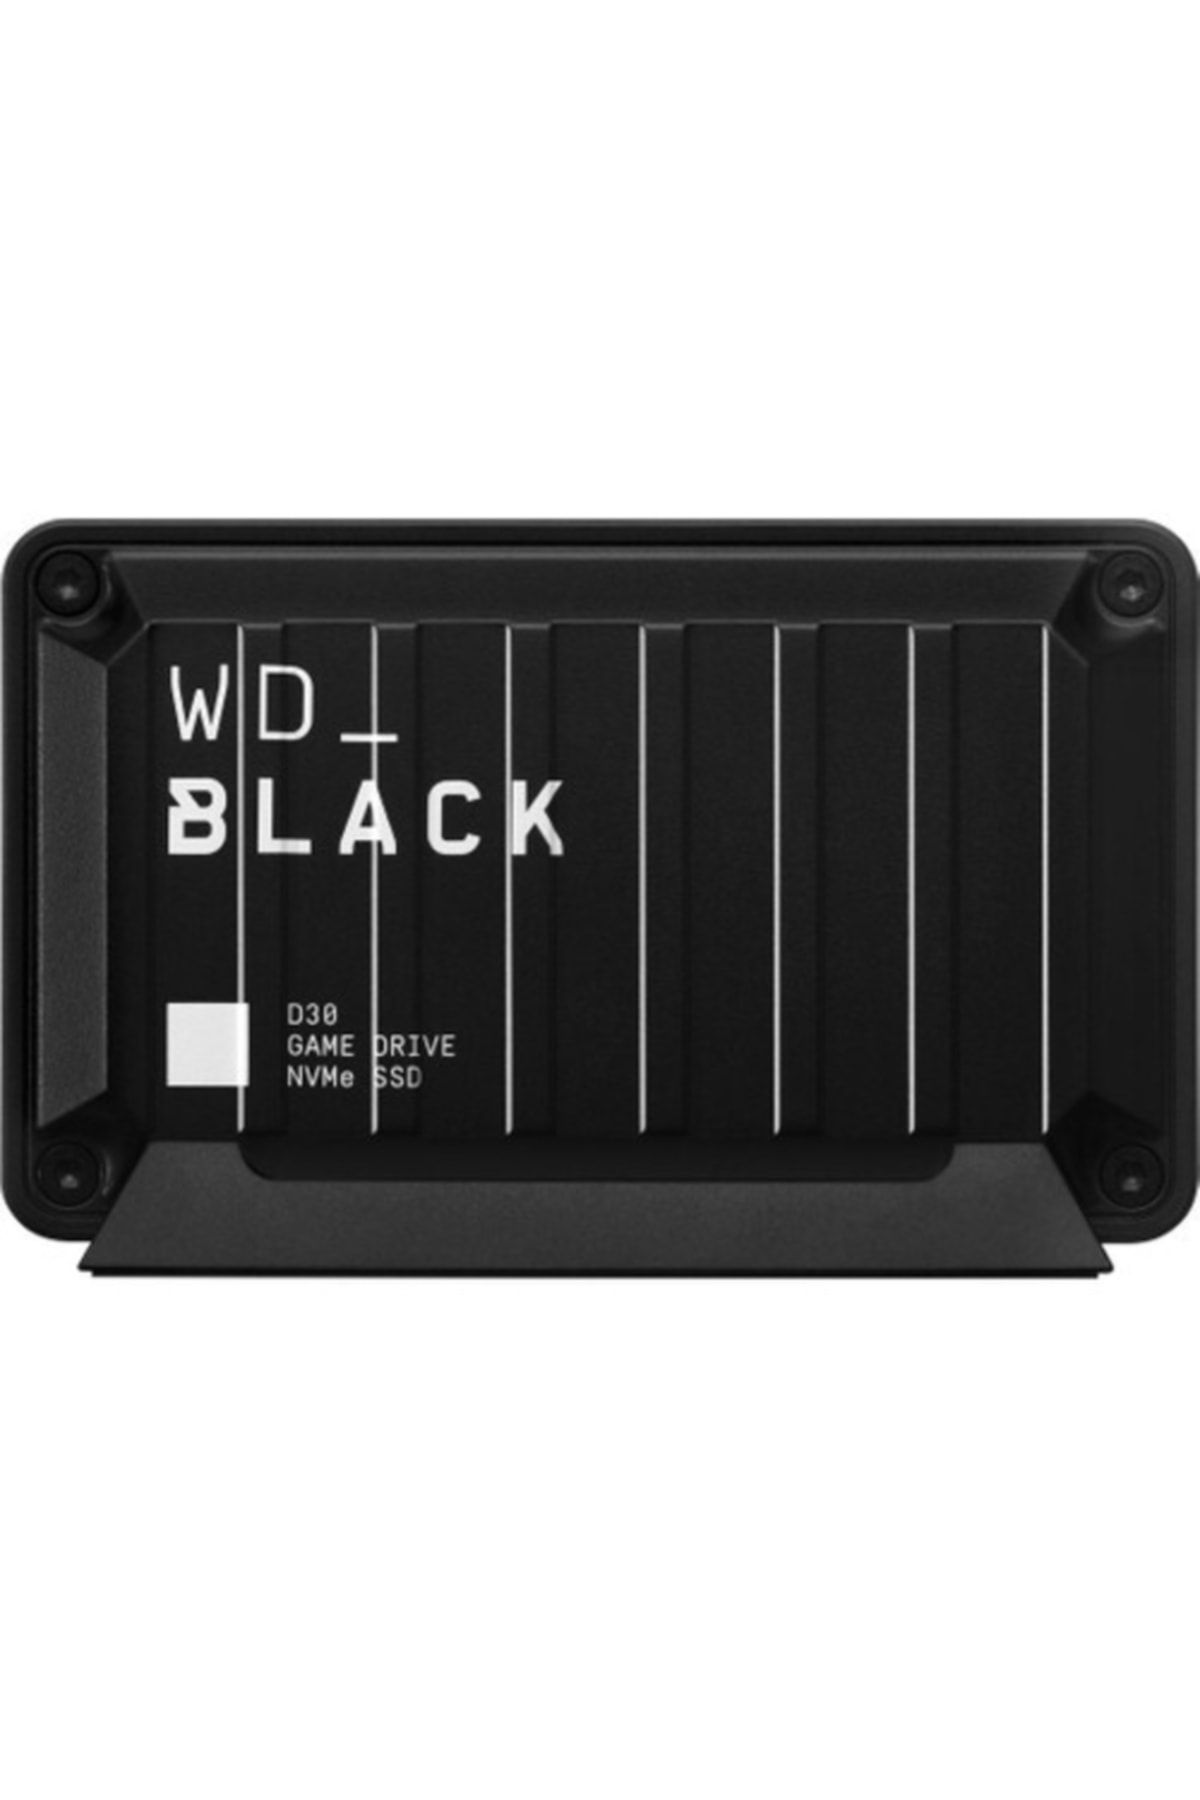 WD Western Digital 1tb Black D30 Game Drıve Taşınabilir Ssd Batl0010bbk-wesn